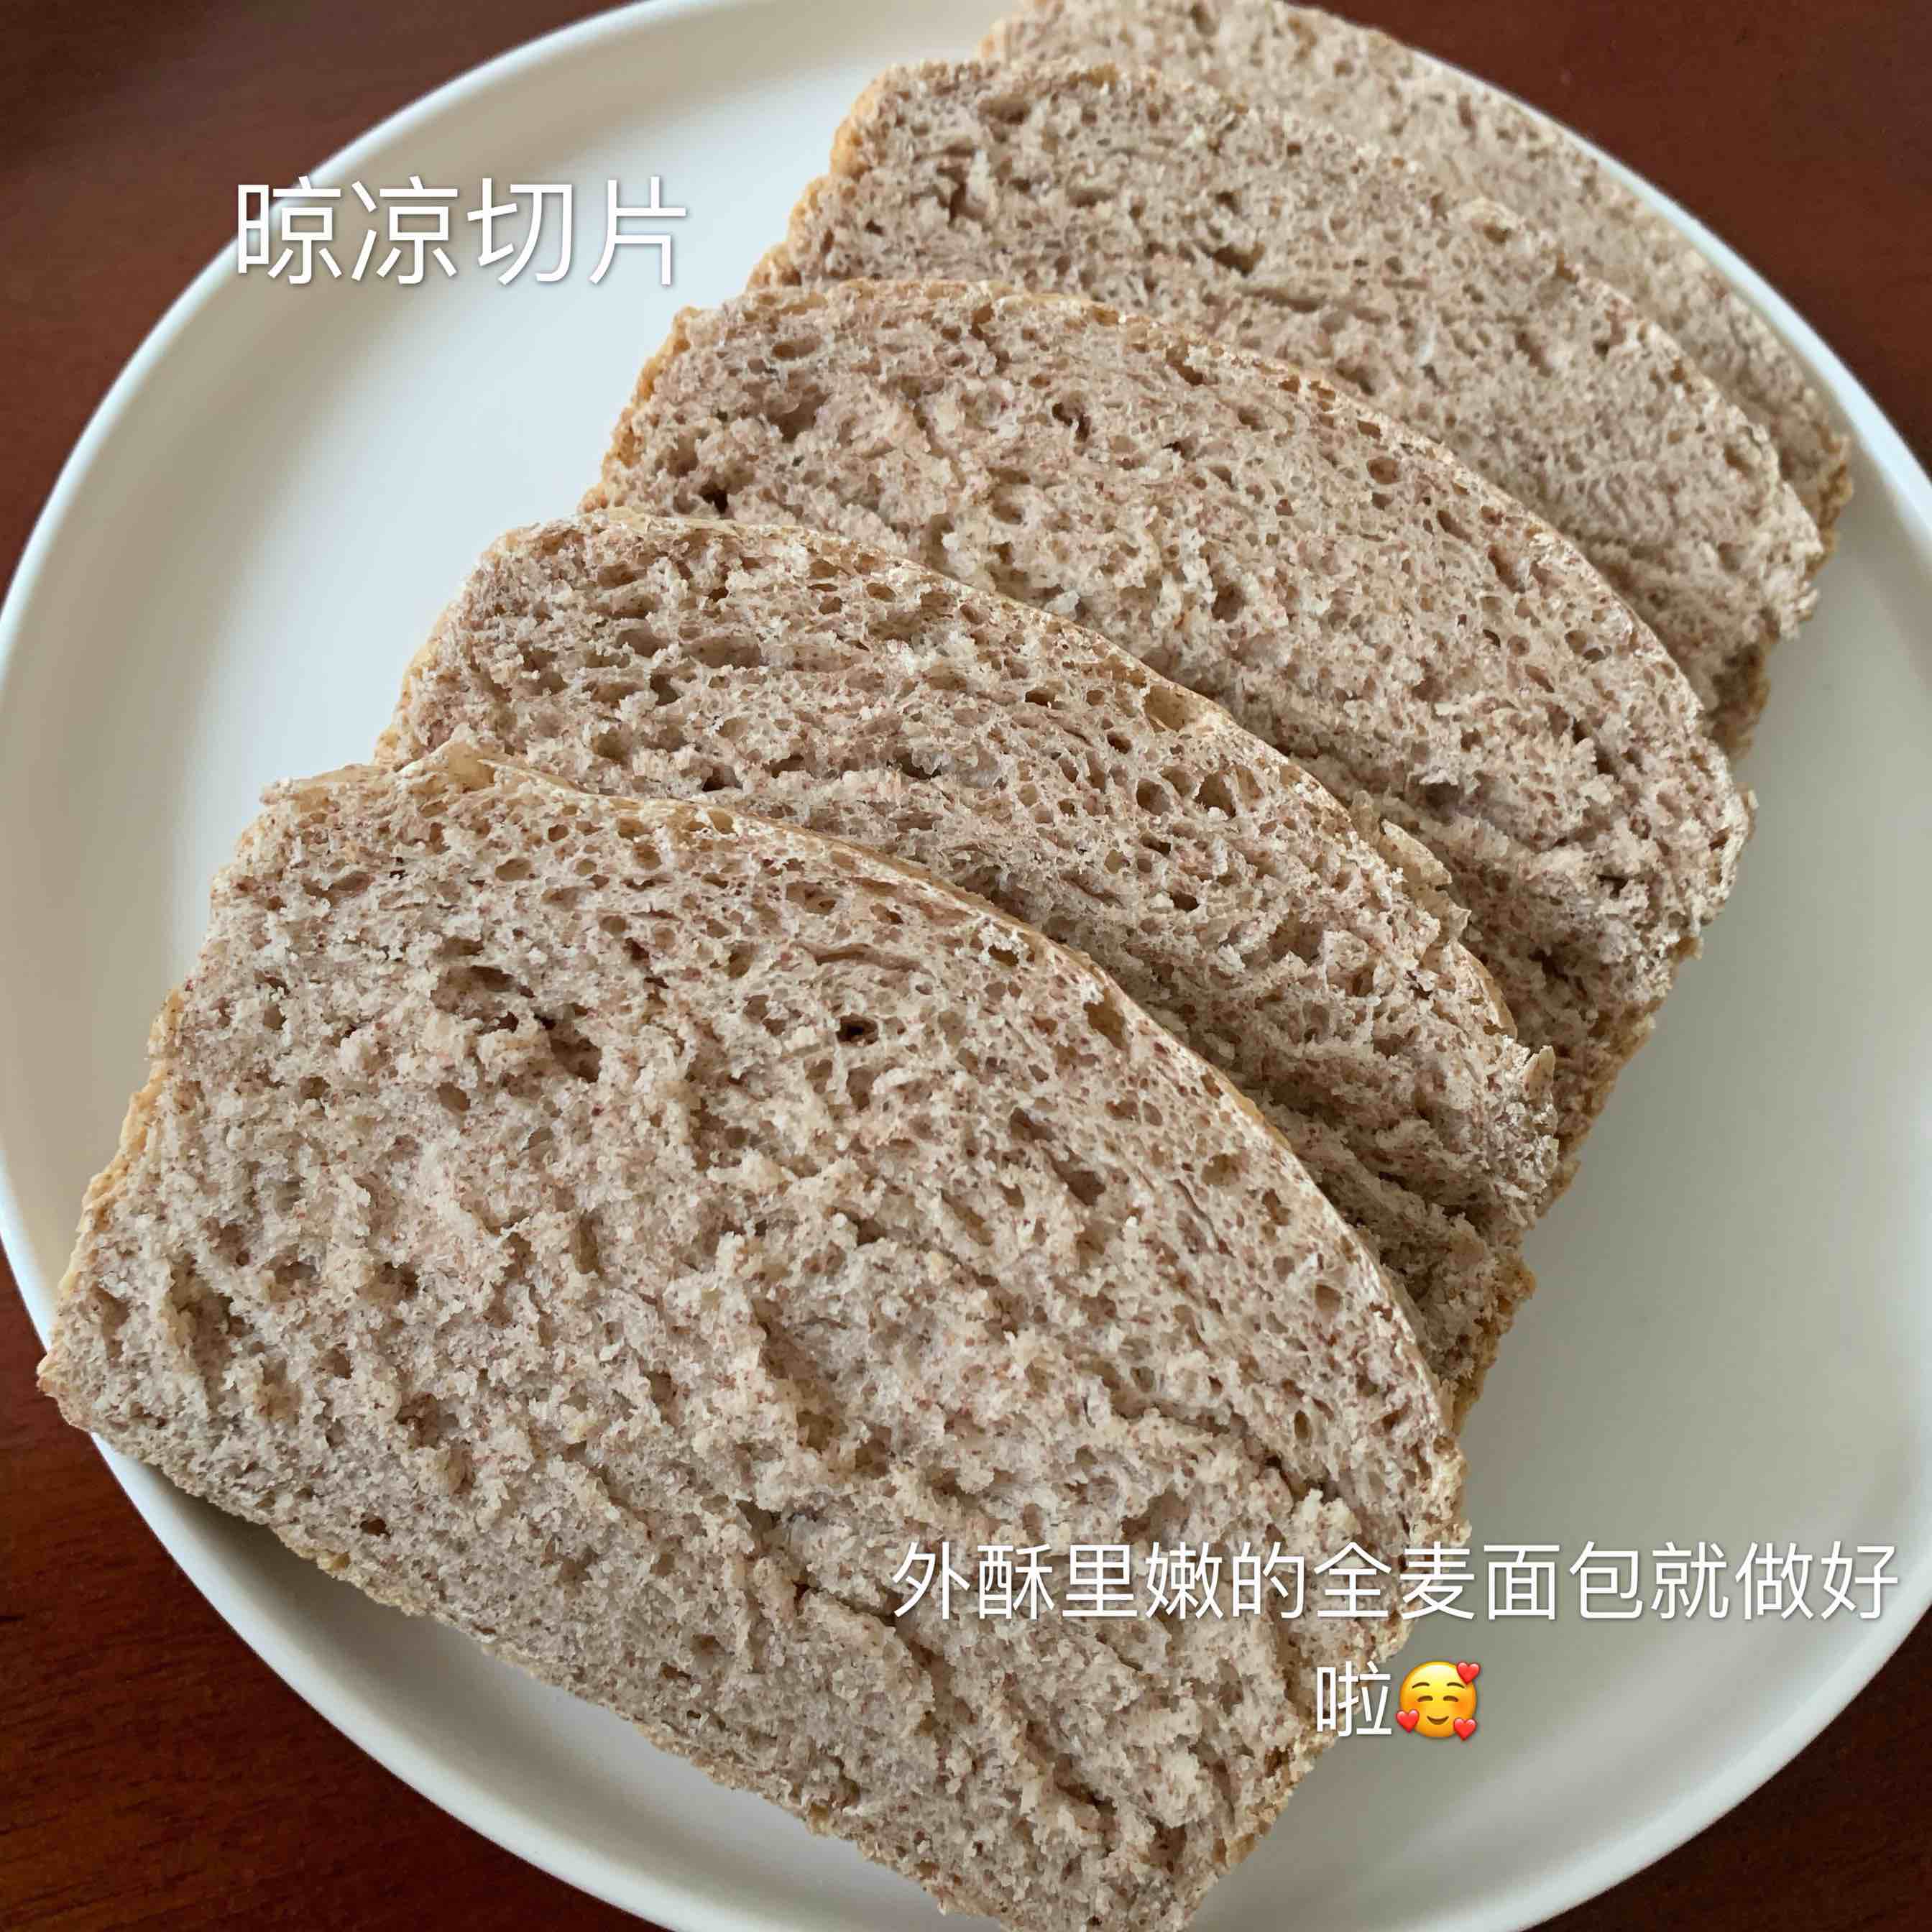 Oil-free and Sugar-free ❗️❗️whole Wheat Toast recipe